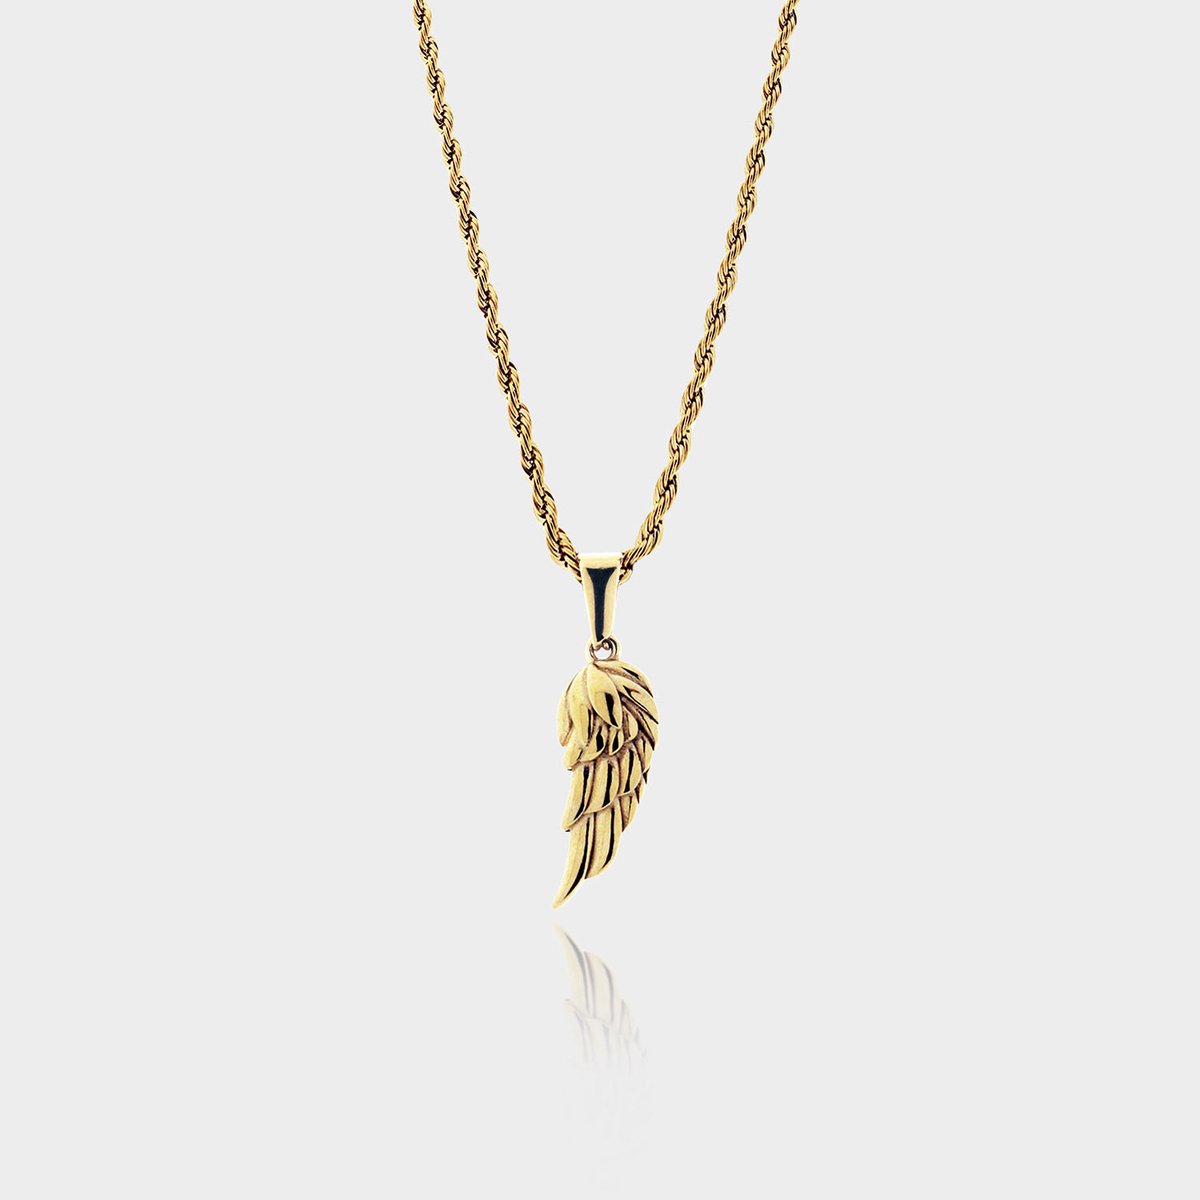 Vleugel Hanger Ketting - Gouden Ketting - 50 cm lang - Ketting Heren met Hanger - Griekse Mythen - Olympus Jewelry